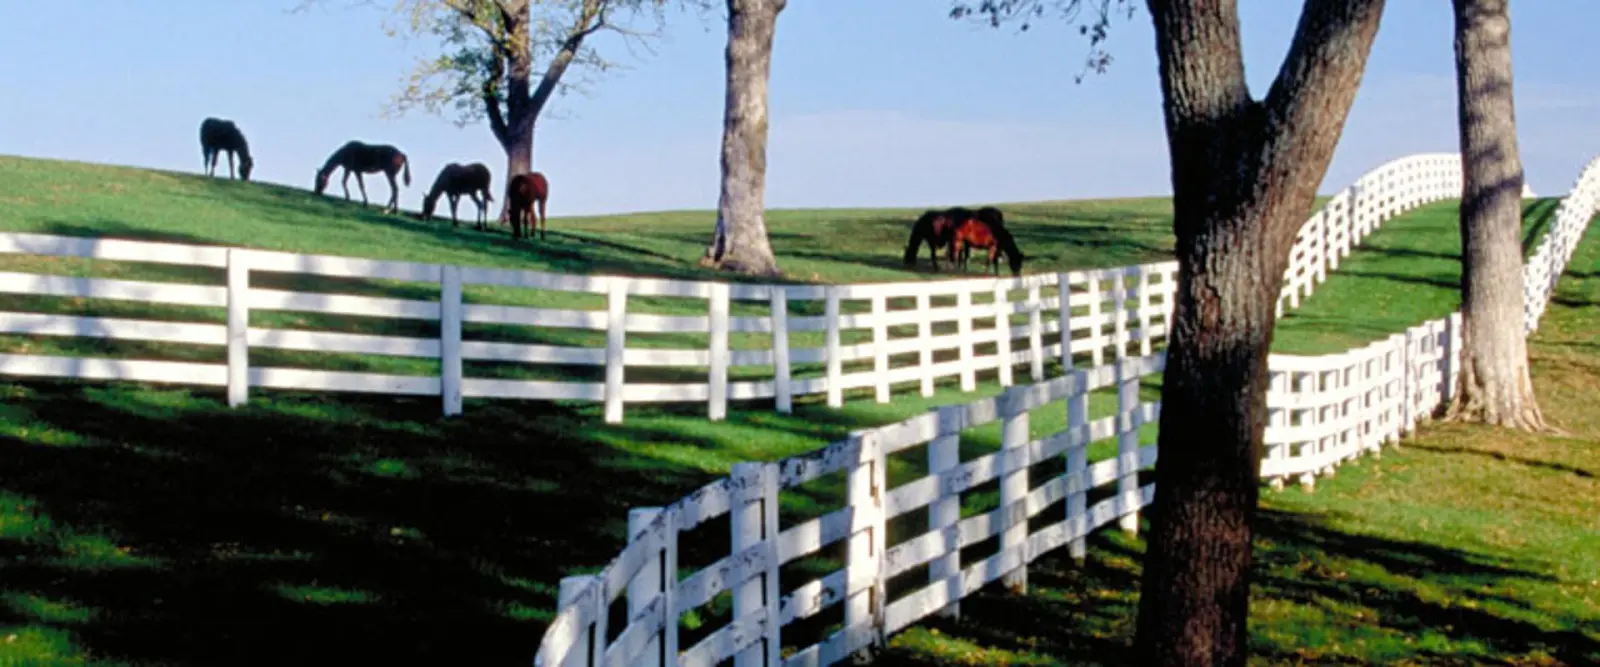 Horse Country in Lexington